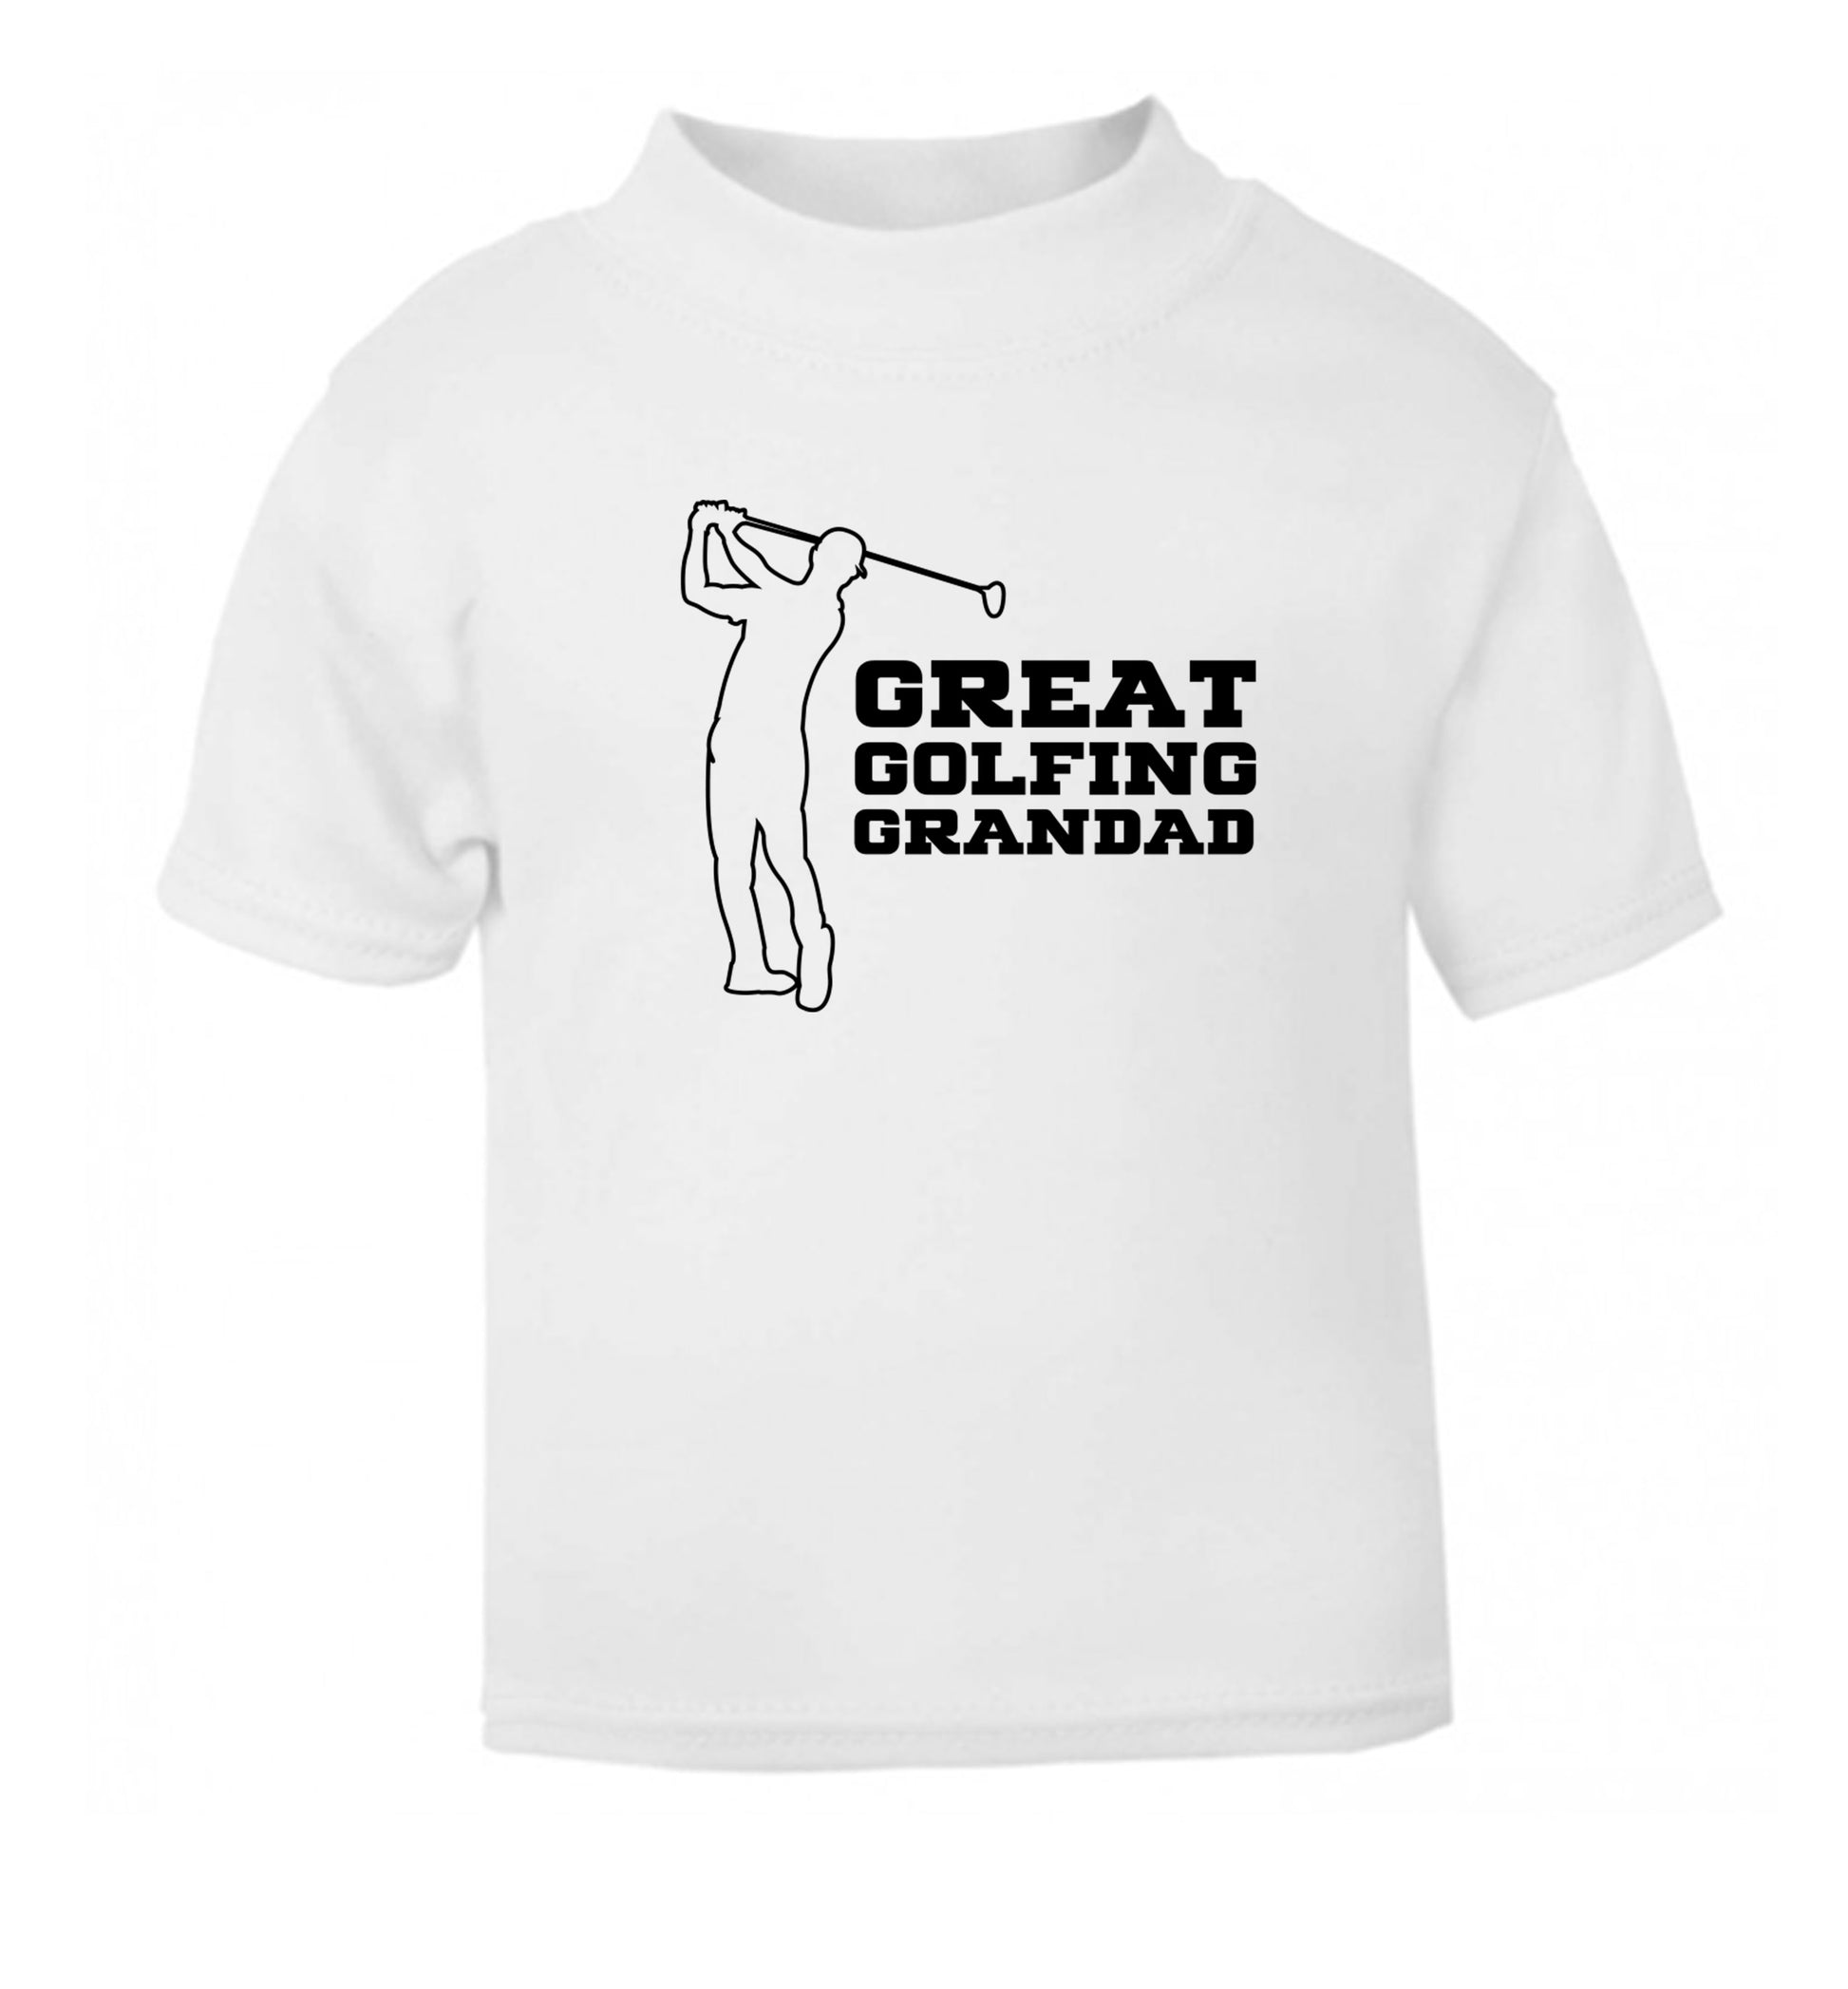 Great Golfing Grandad white Baby Toddler Tshirt 2 Years